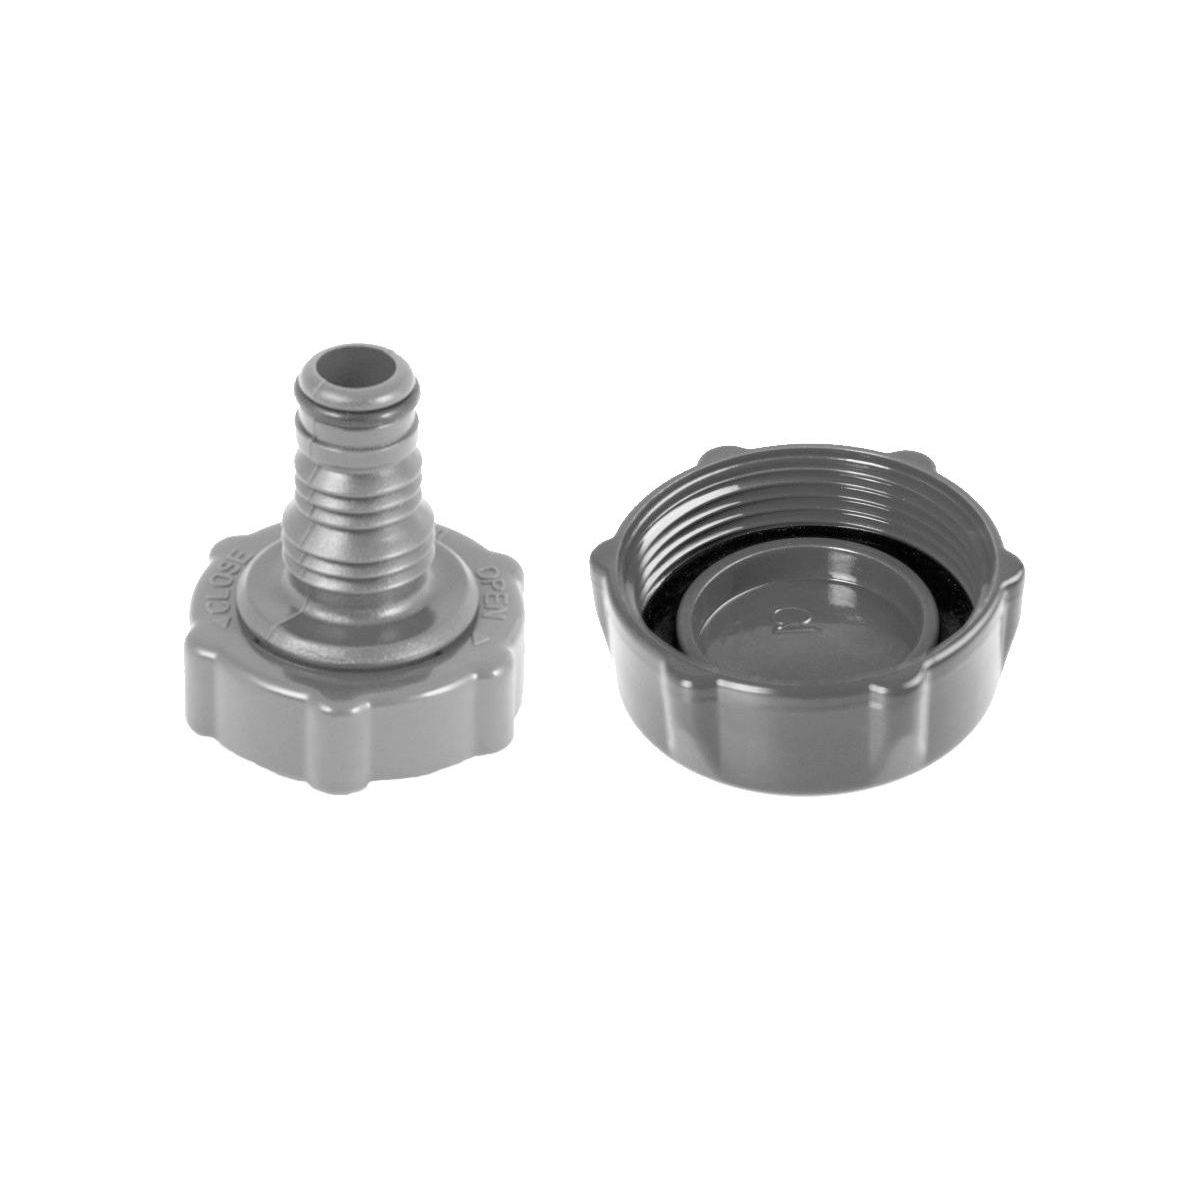 BESTWAY Bouchon valve de vidange + adaptateur pour piscines tubulaires Steel Pro et Steel Pro Max - Bestway